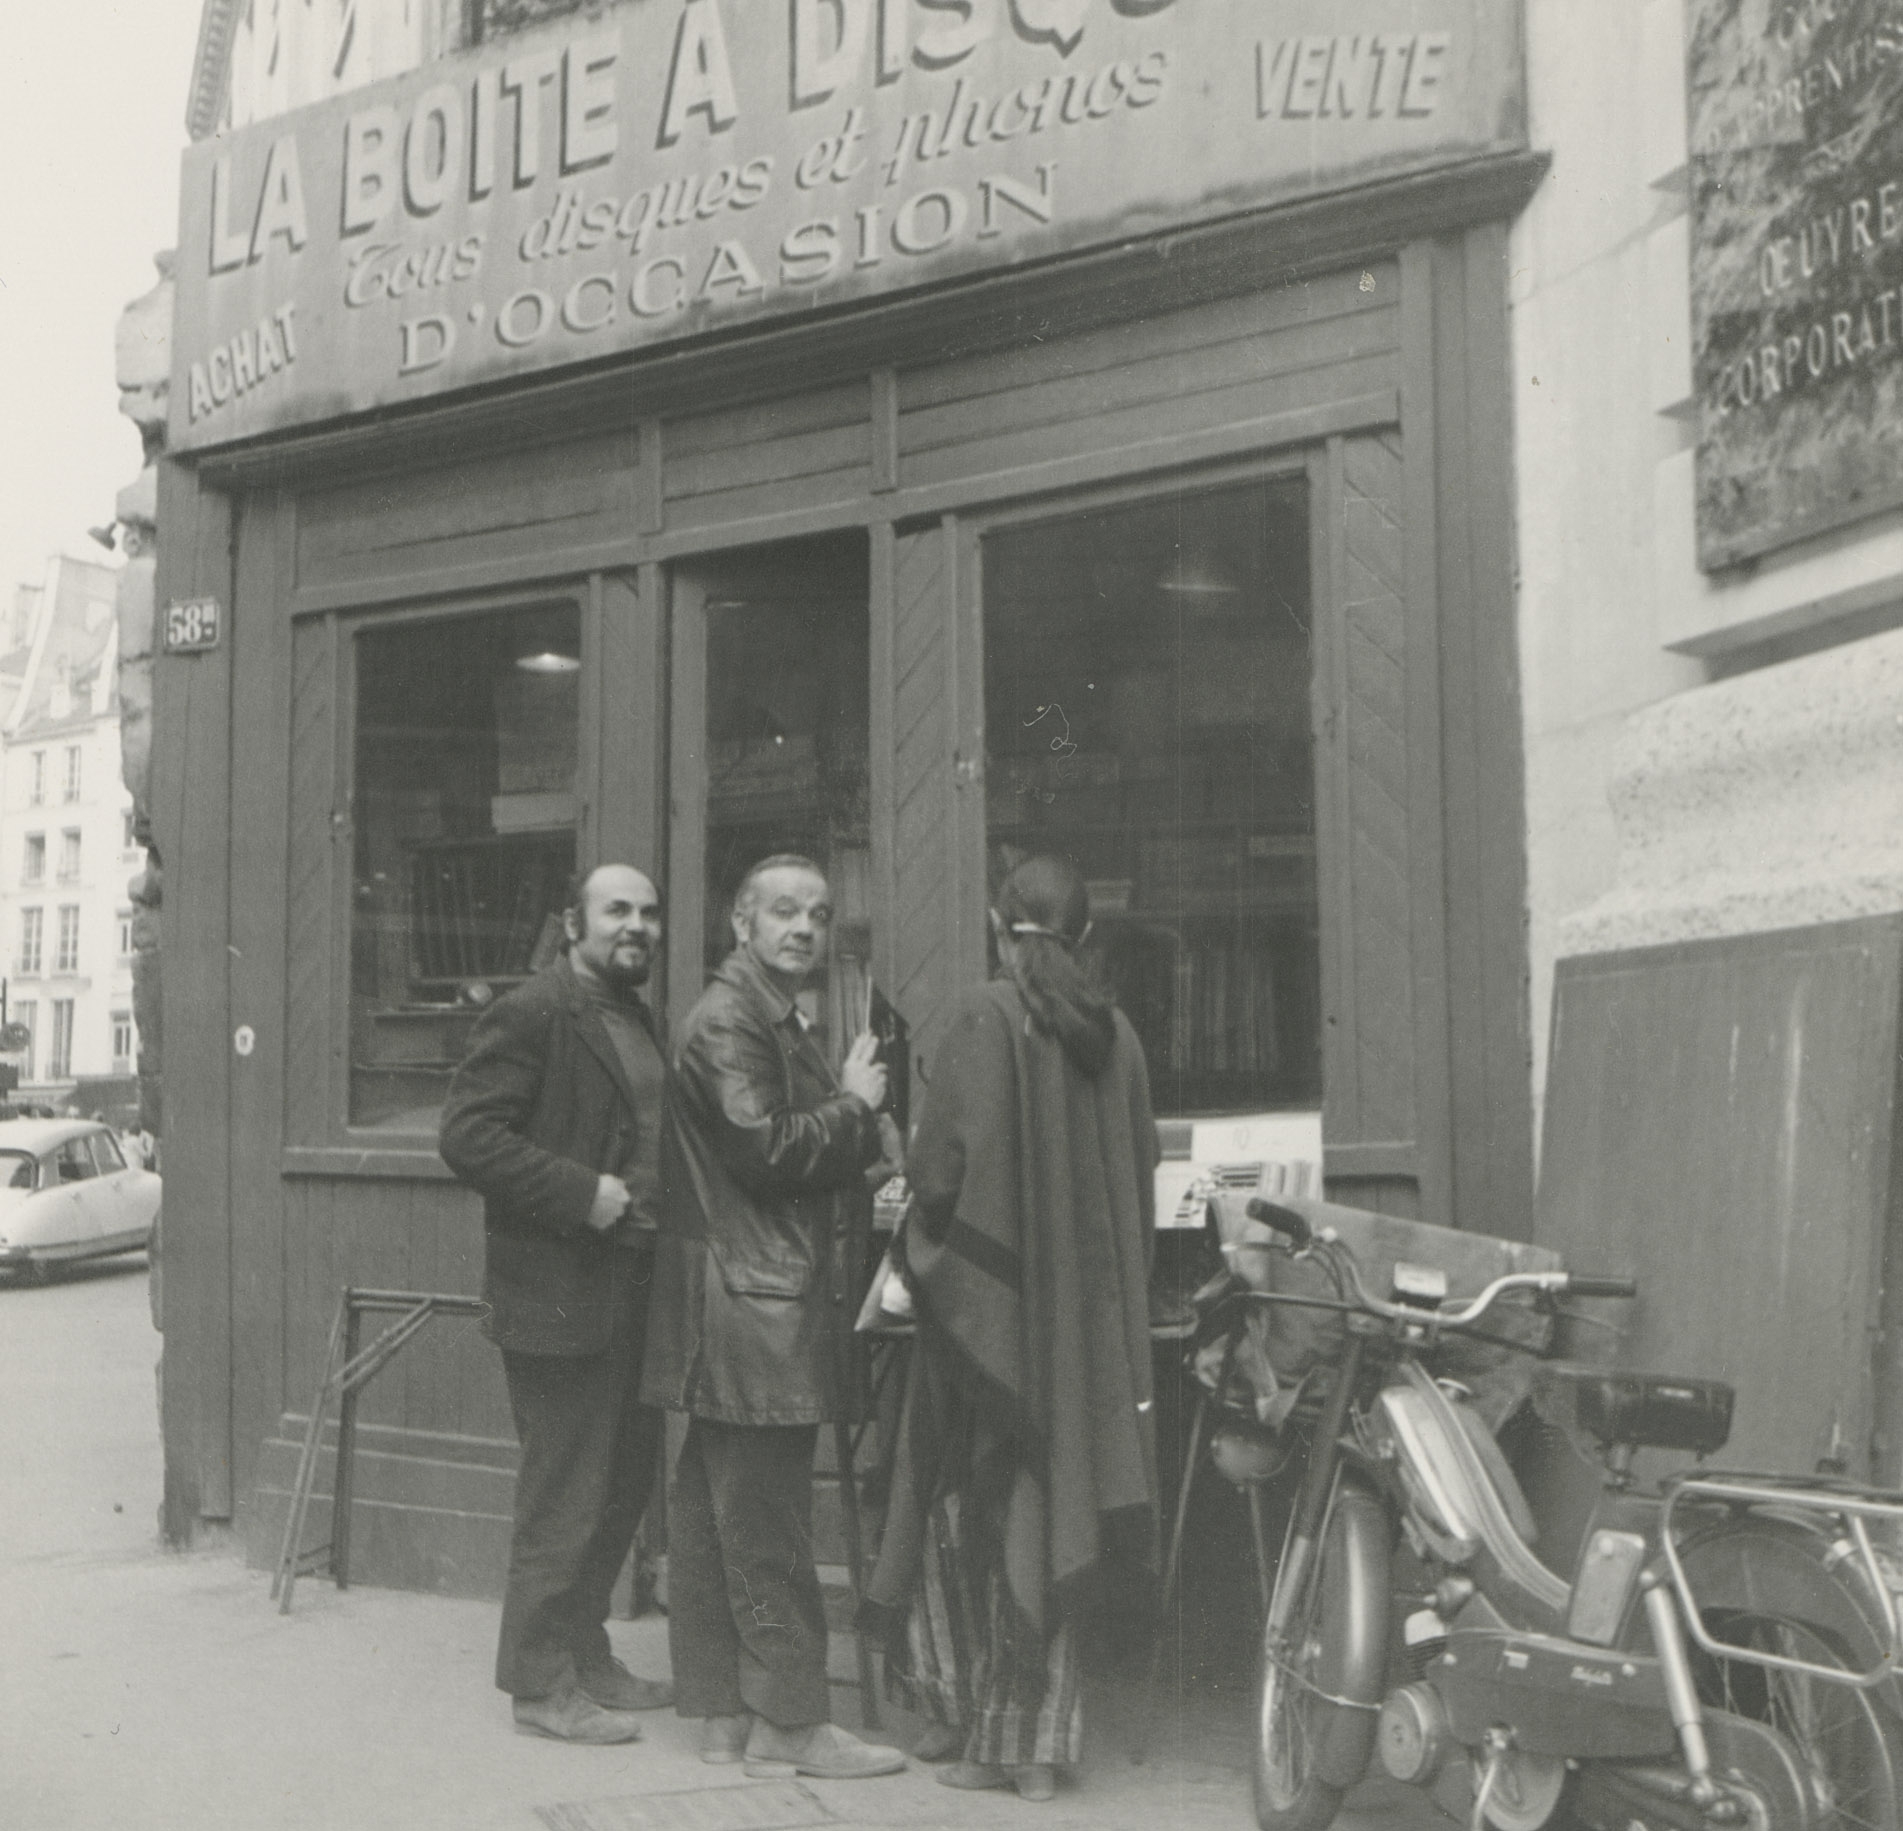 Percourt's record shop in Paris